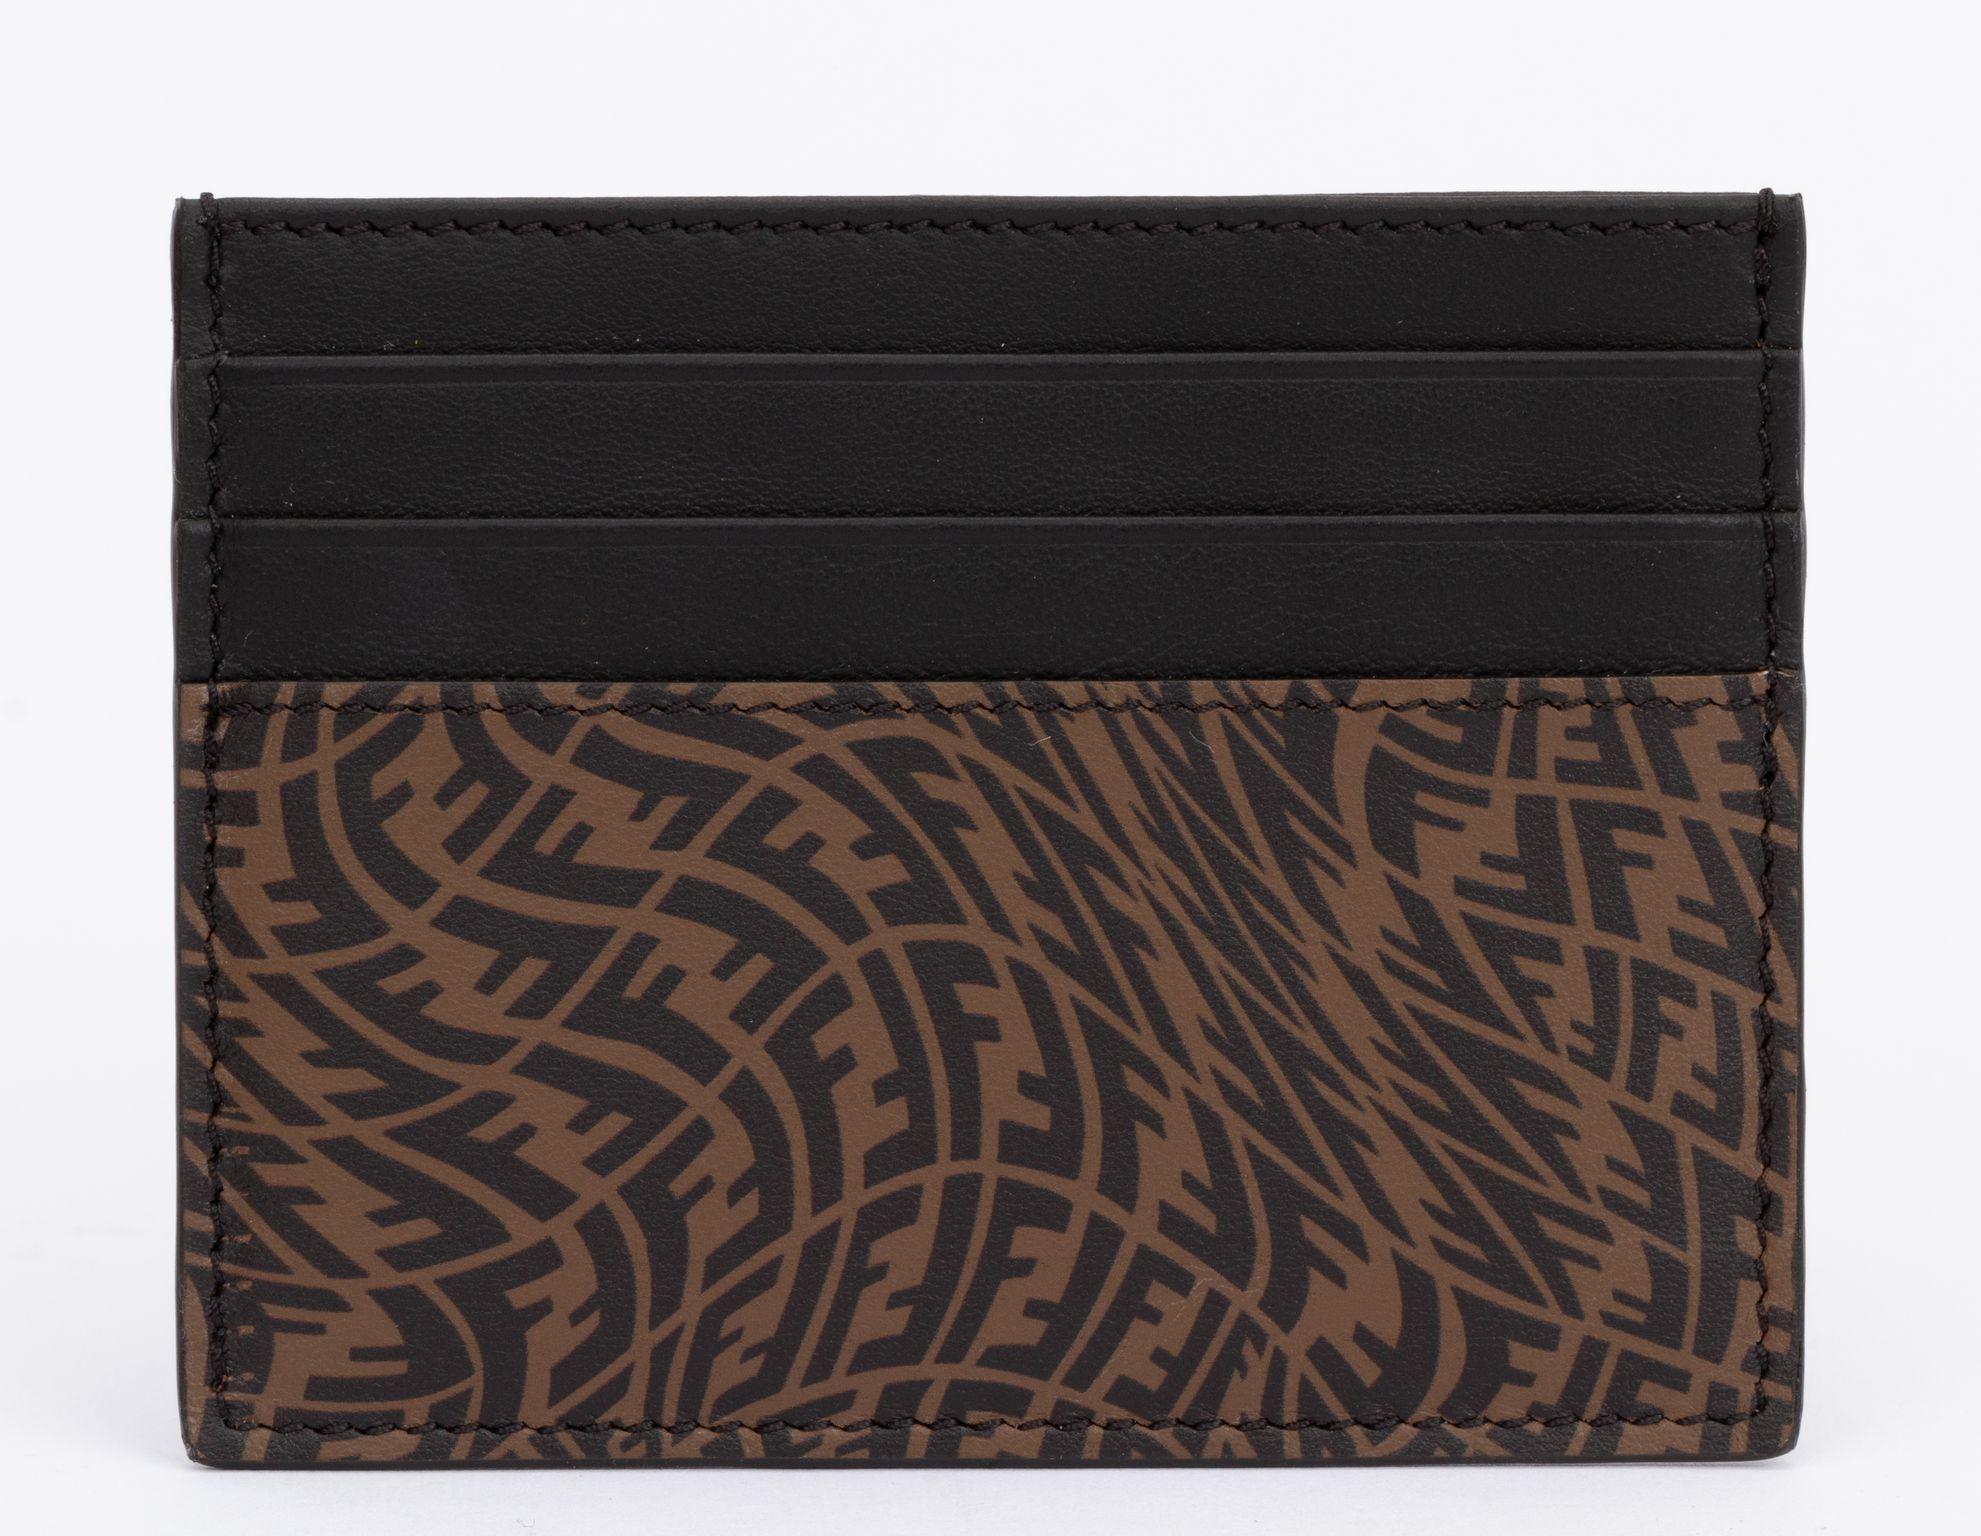 Fendi Black new brown and black vertigo print credit card case. Includes tag, original box and dust cover.